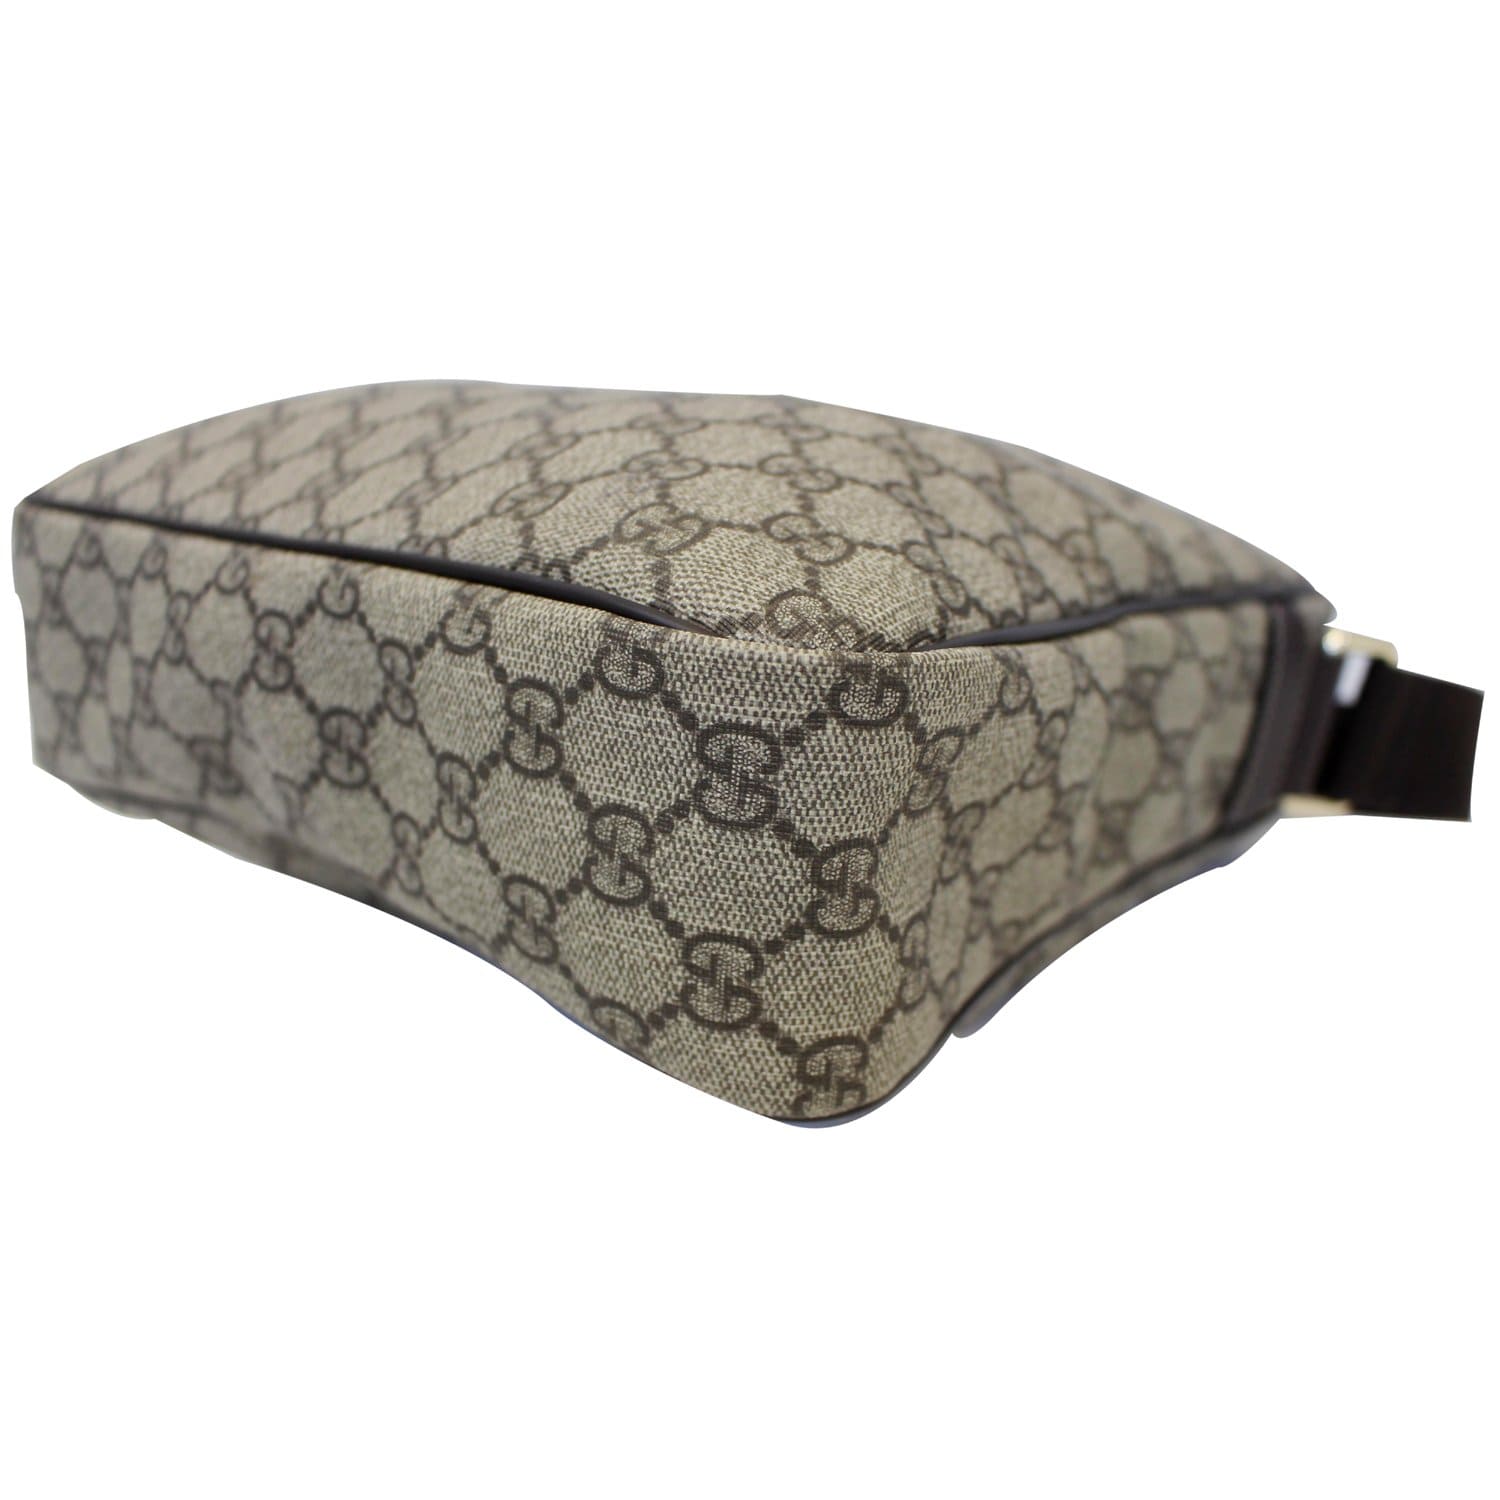 Gucci Imprime Monogram GG Medium Silver Messenger Bag (201448)